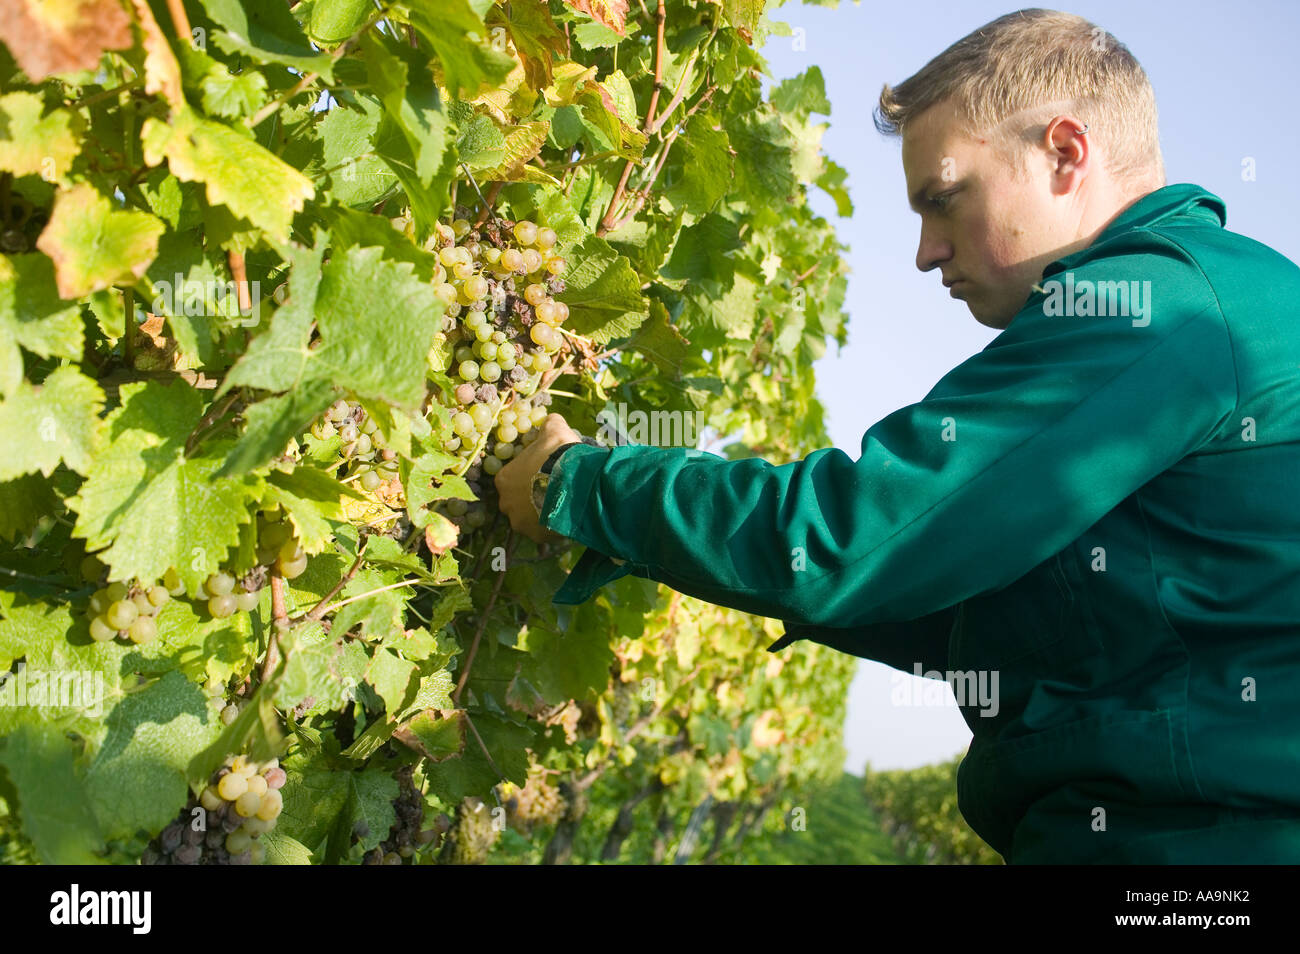 worker gathering grapes at vineyard Stock Photo